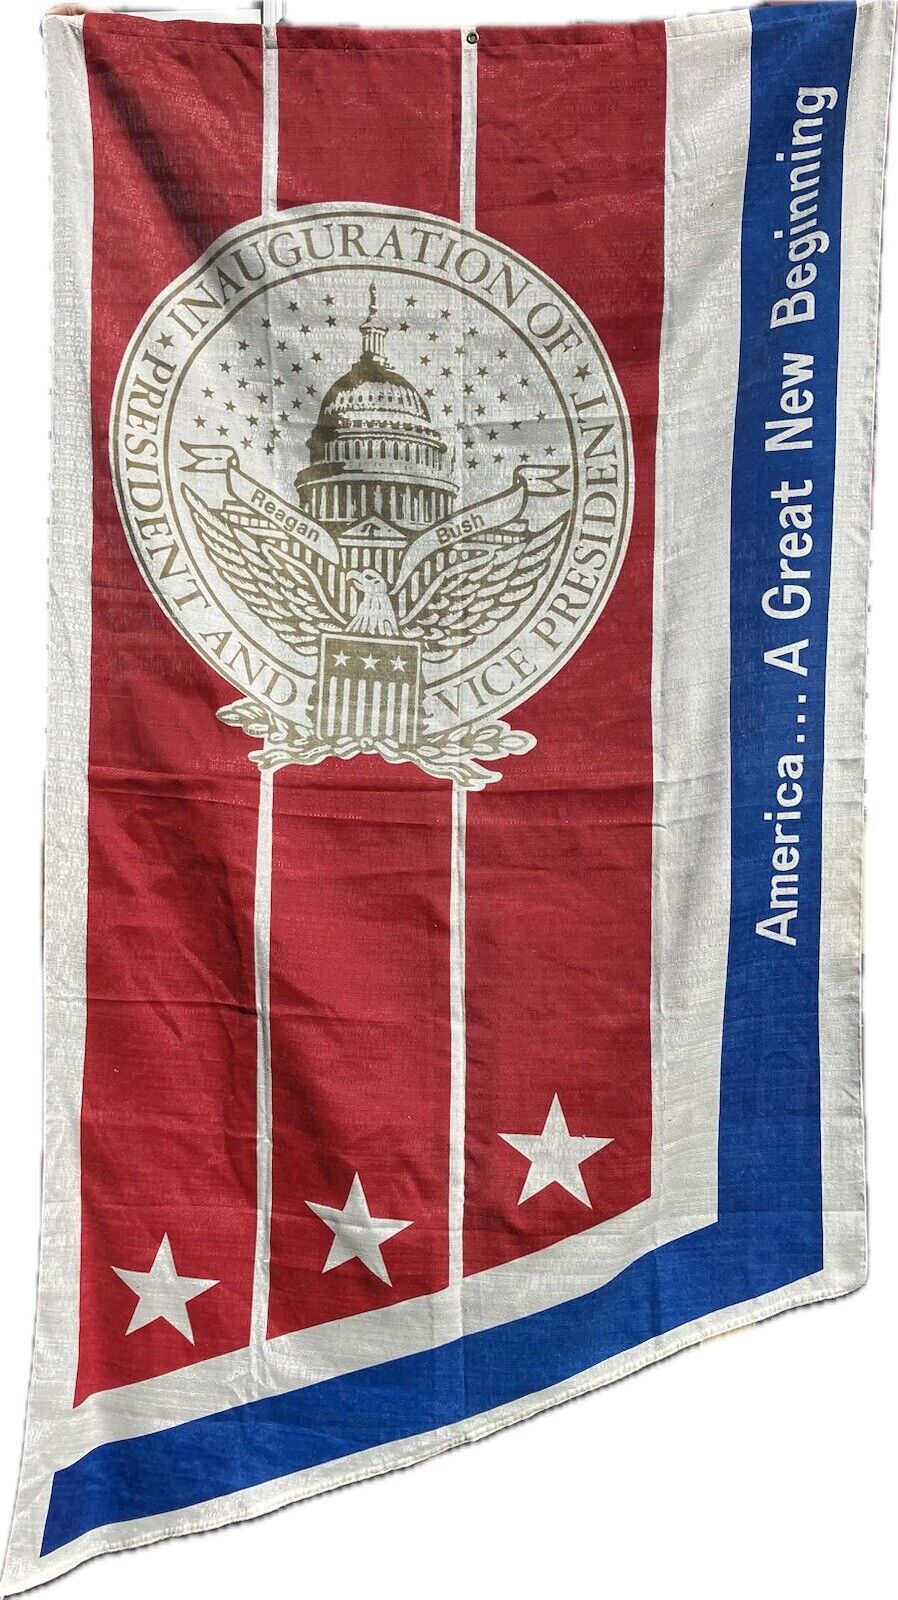 Reagan Inauguration Banner Flag 46x96 America A Great New Beginning 1981